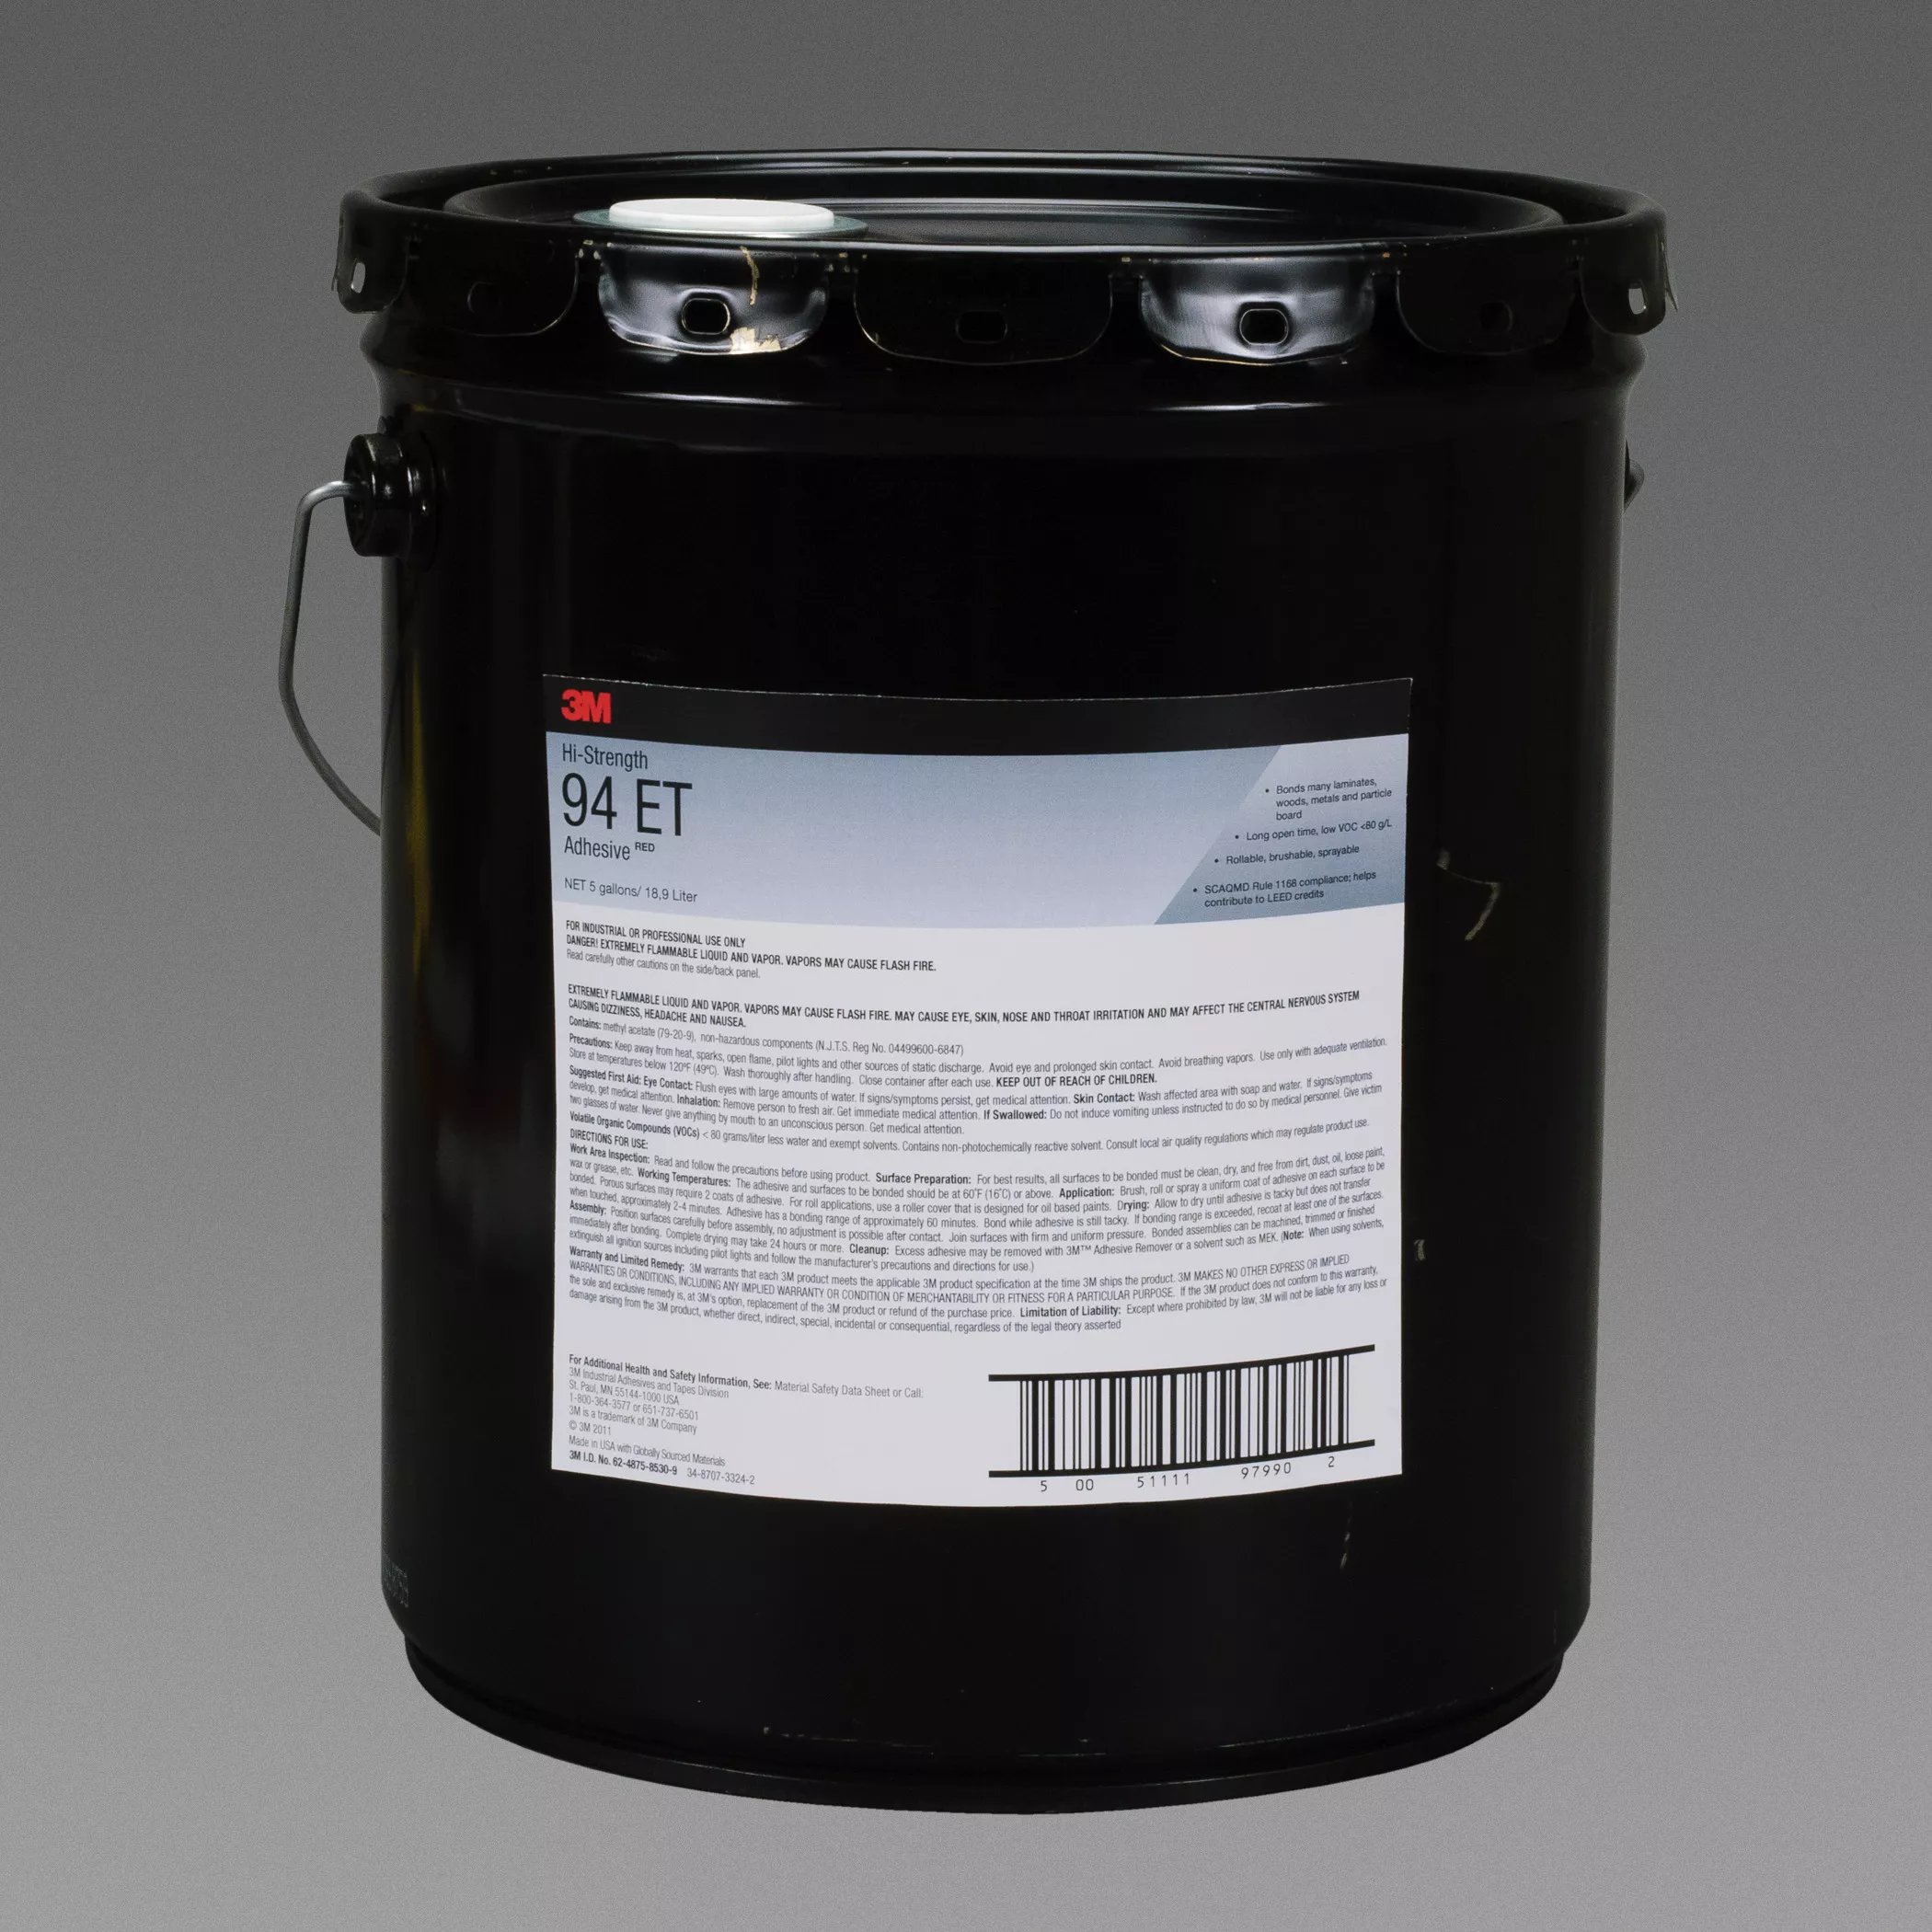 3M™ Hi-Strength 94 ET Adhesive, Red, 5 Gallon (Pail), Drum